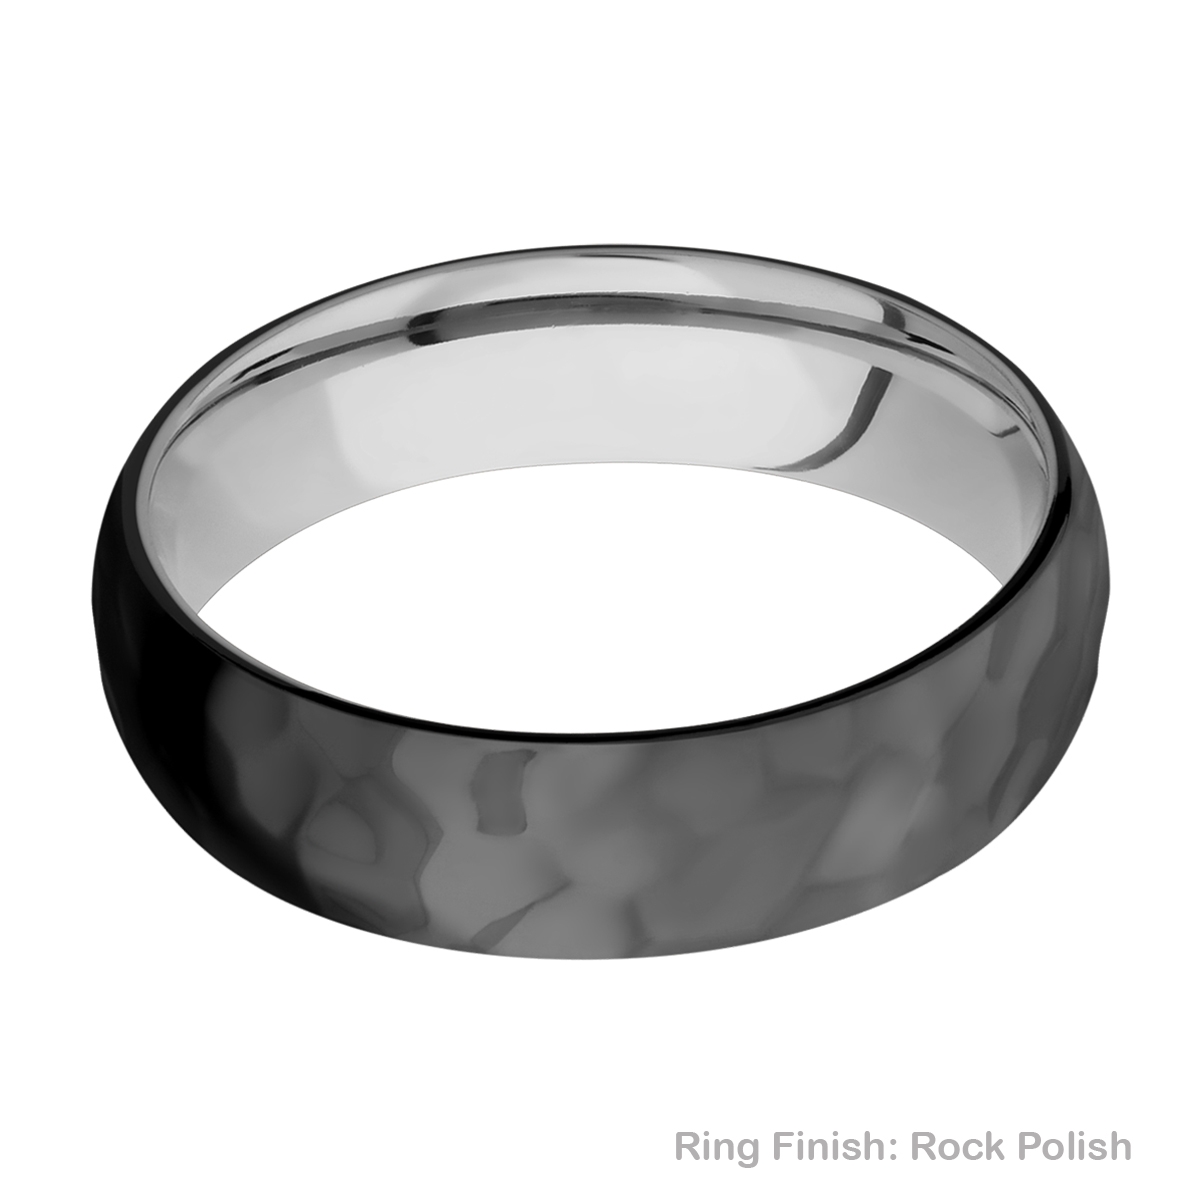 Lashbrook CCSLEEVEZ6D Zirconium and Cobalt Chrome Wedding Ring or Band Alternative View 14